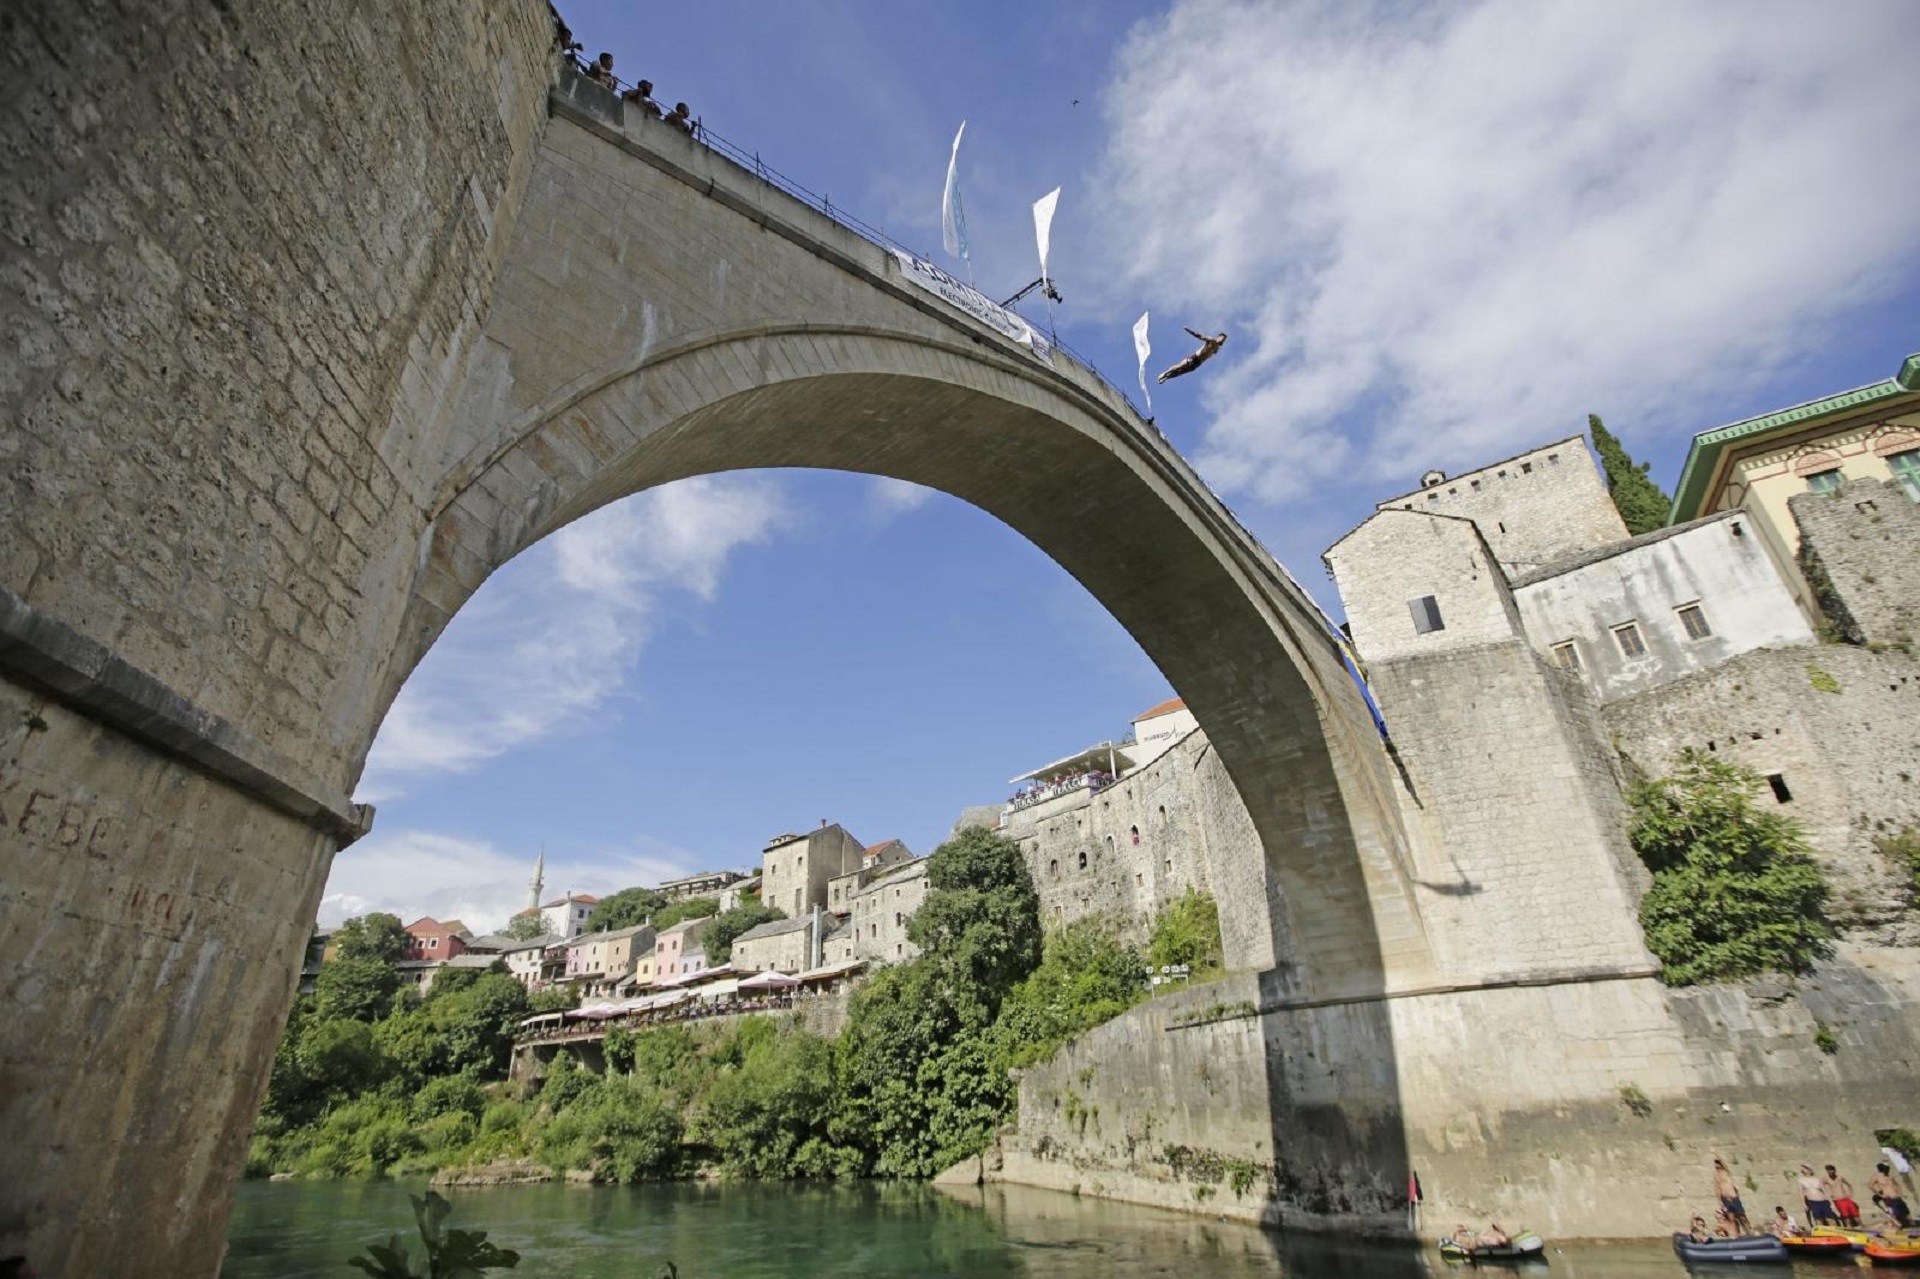 26.07.2020. , Mostar - Odrzani 454. tradicionalni skokovi sa Starog mosta. 

Photo: Denis Kapetanovic/PIXSELL